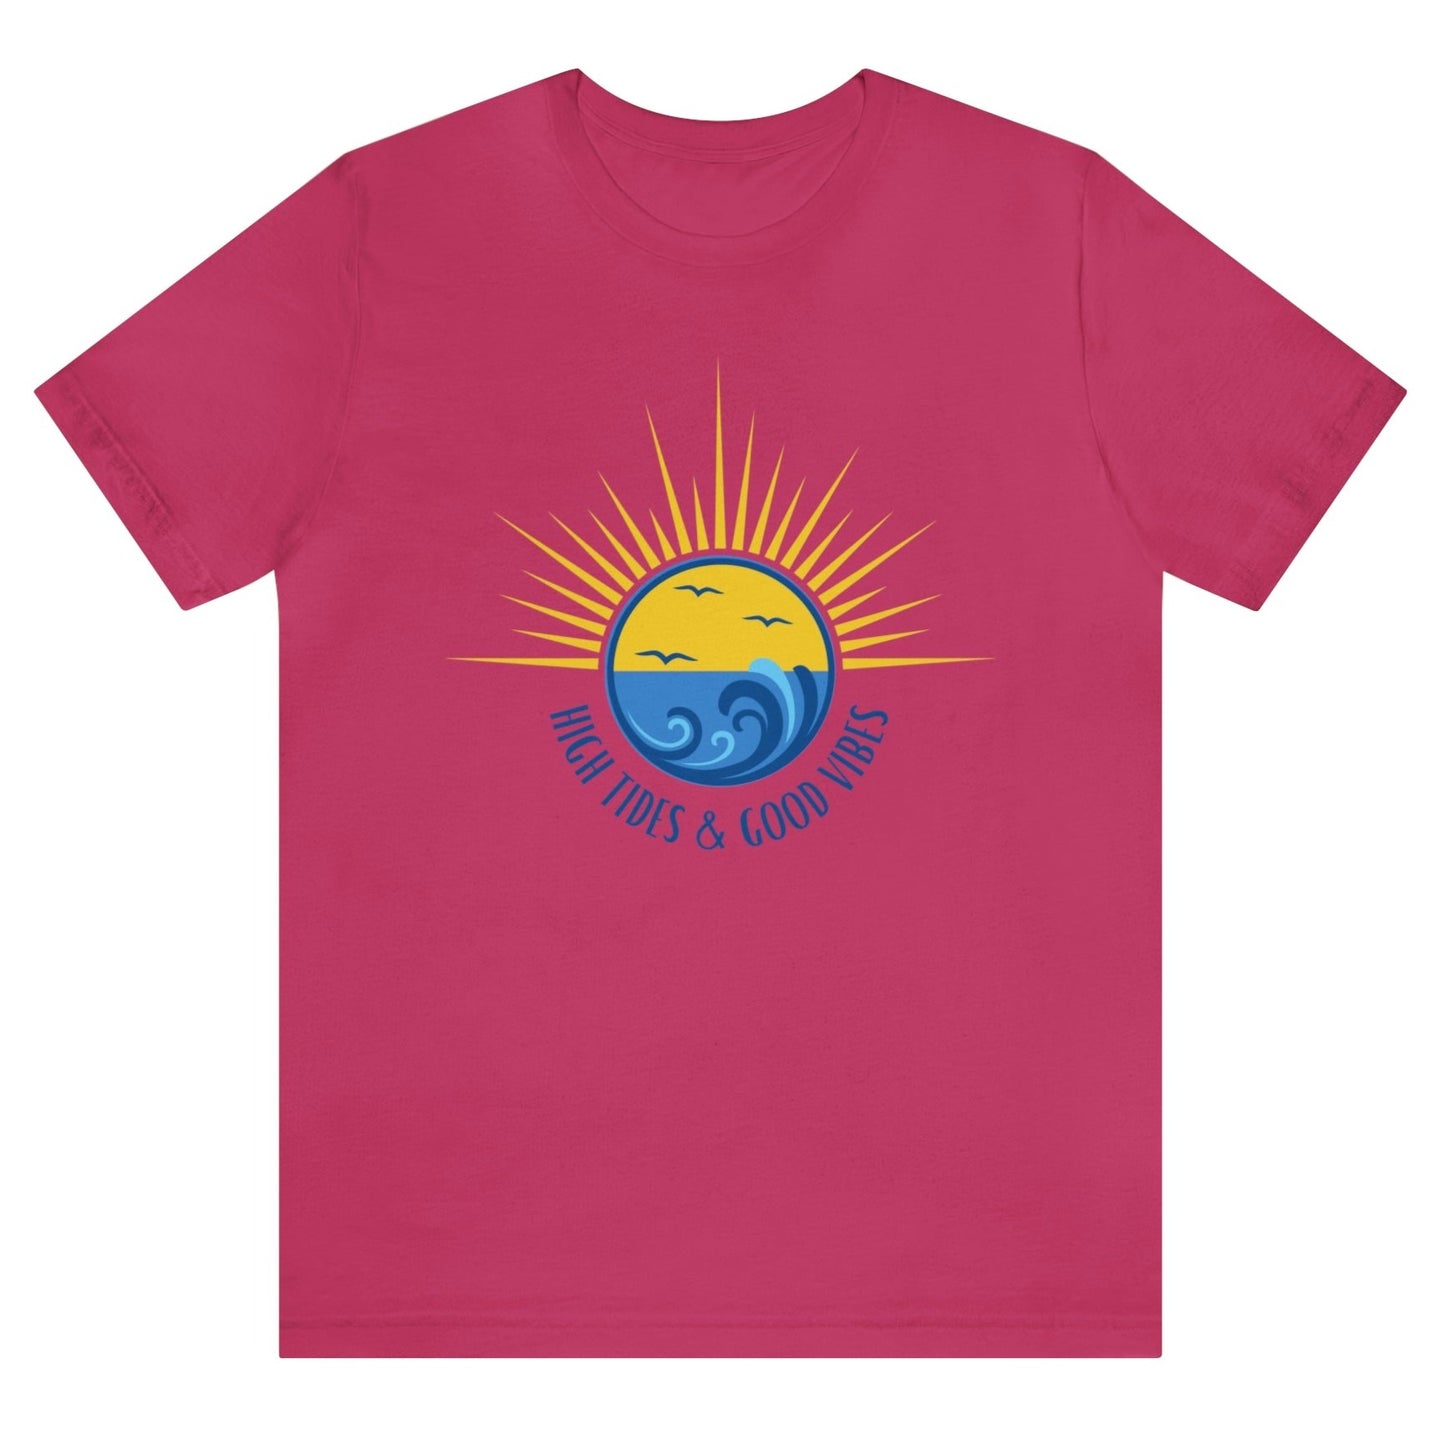 high-tides-and-good-vibes-berry-t-shirt-beach-sunset-unisex